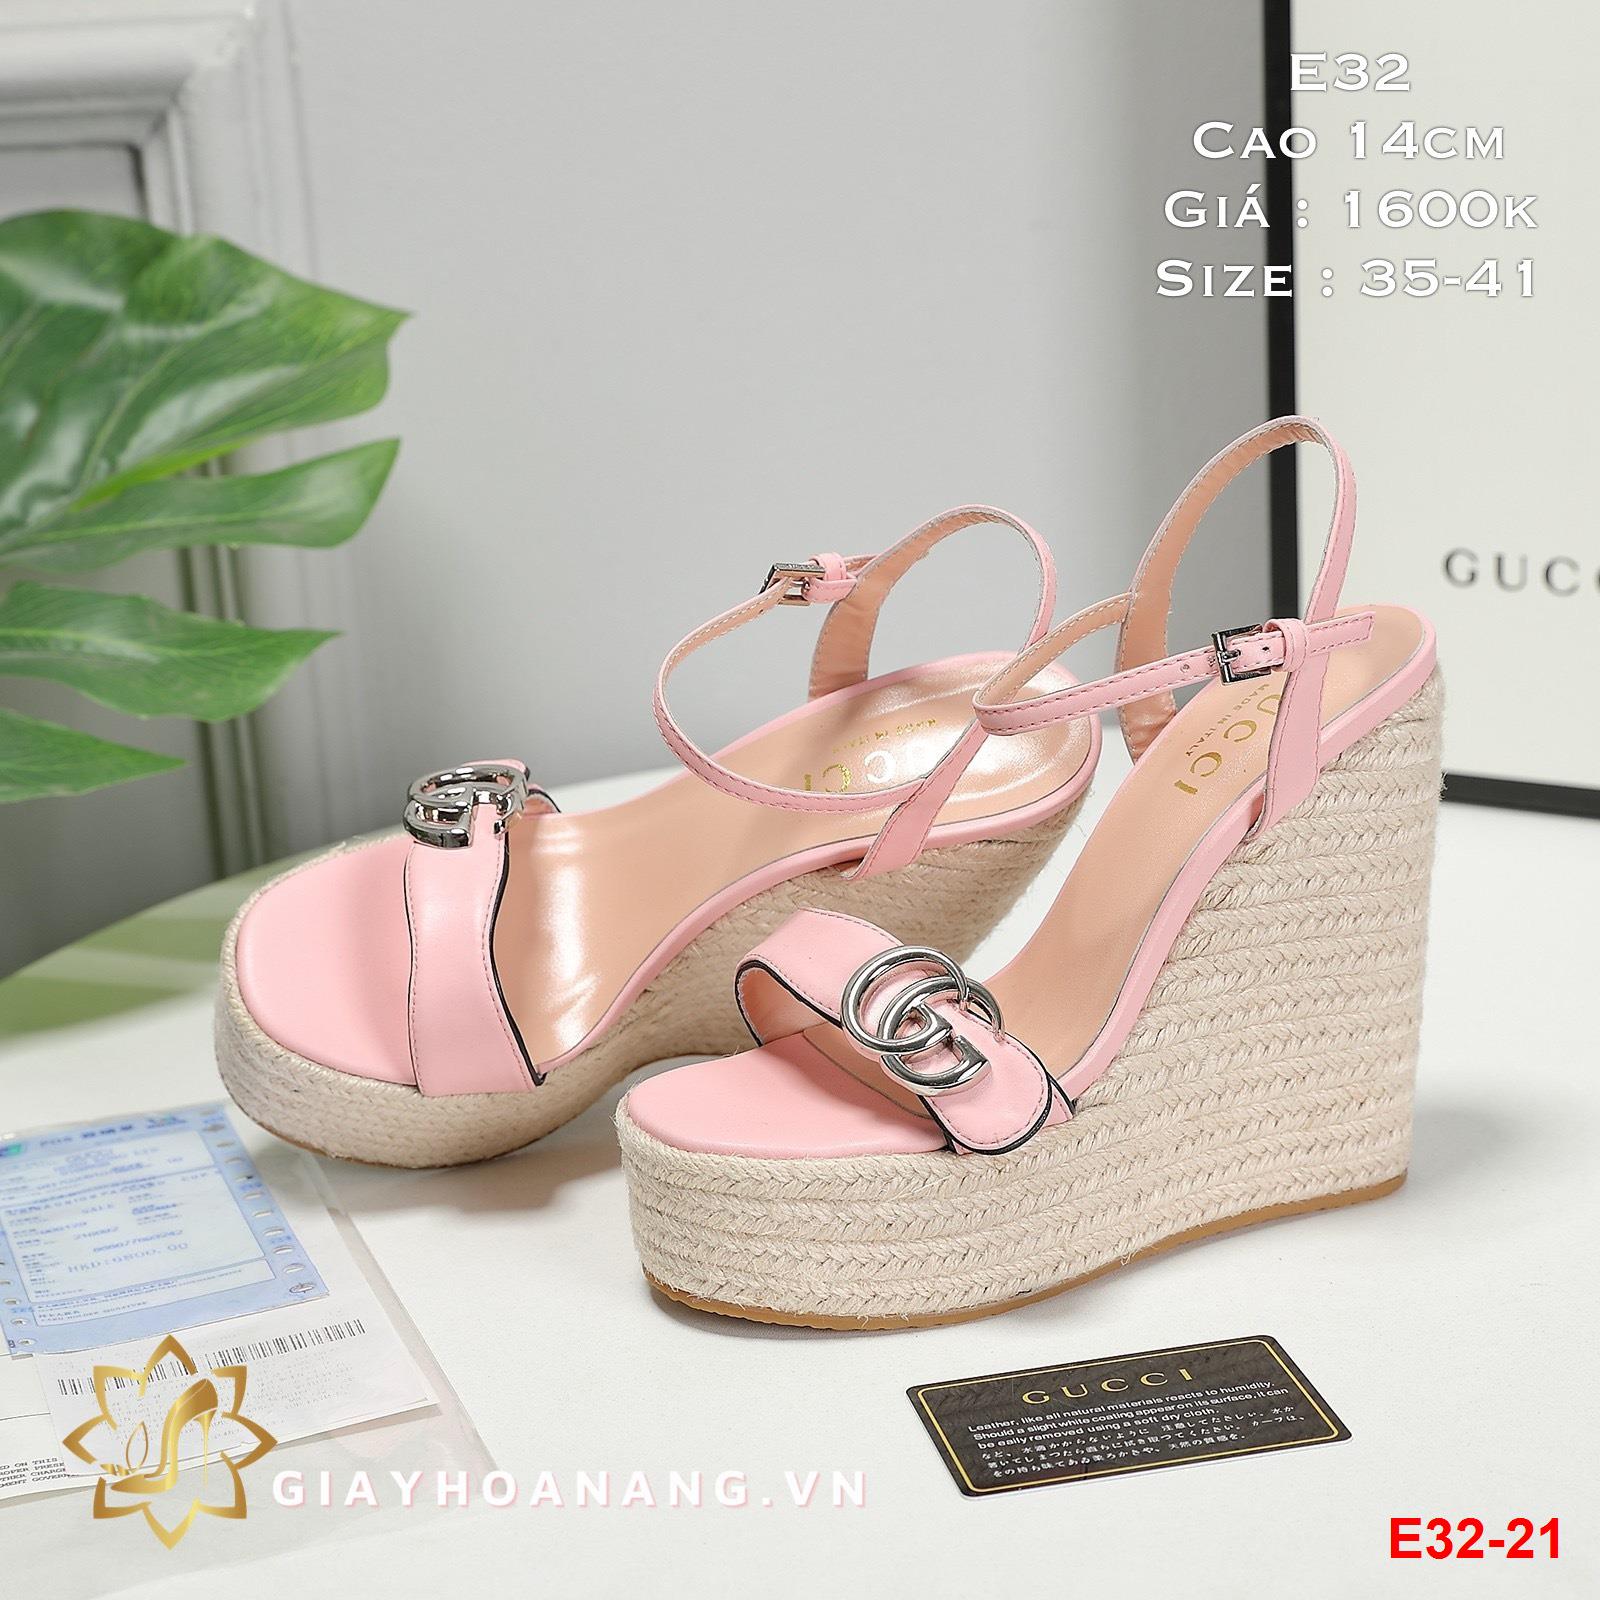 E32-21 Gucci sandal cao 14cm siêu cấp